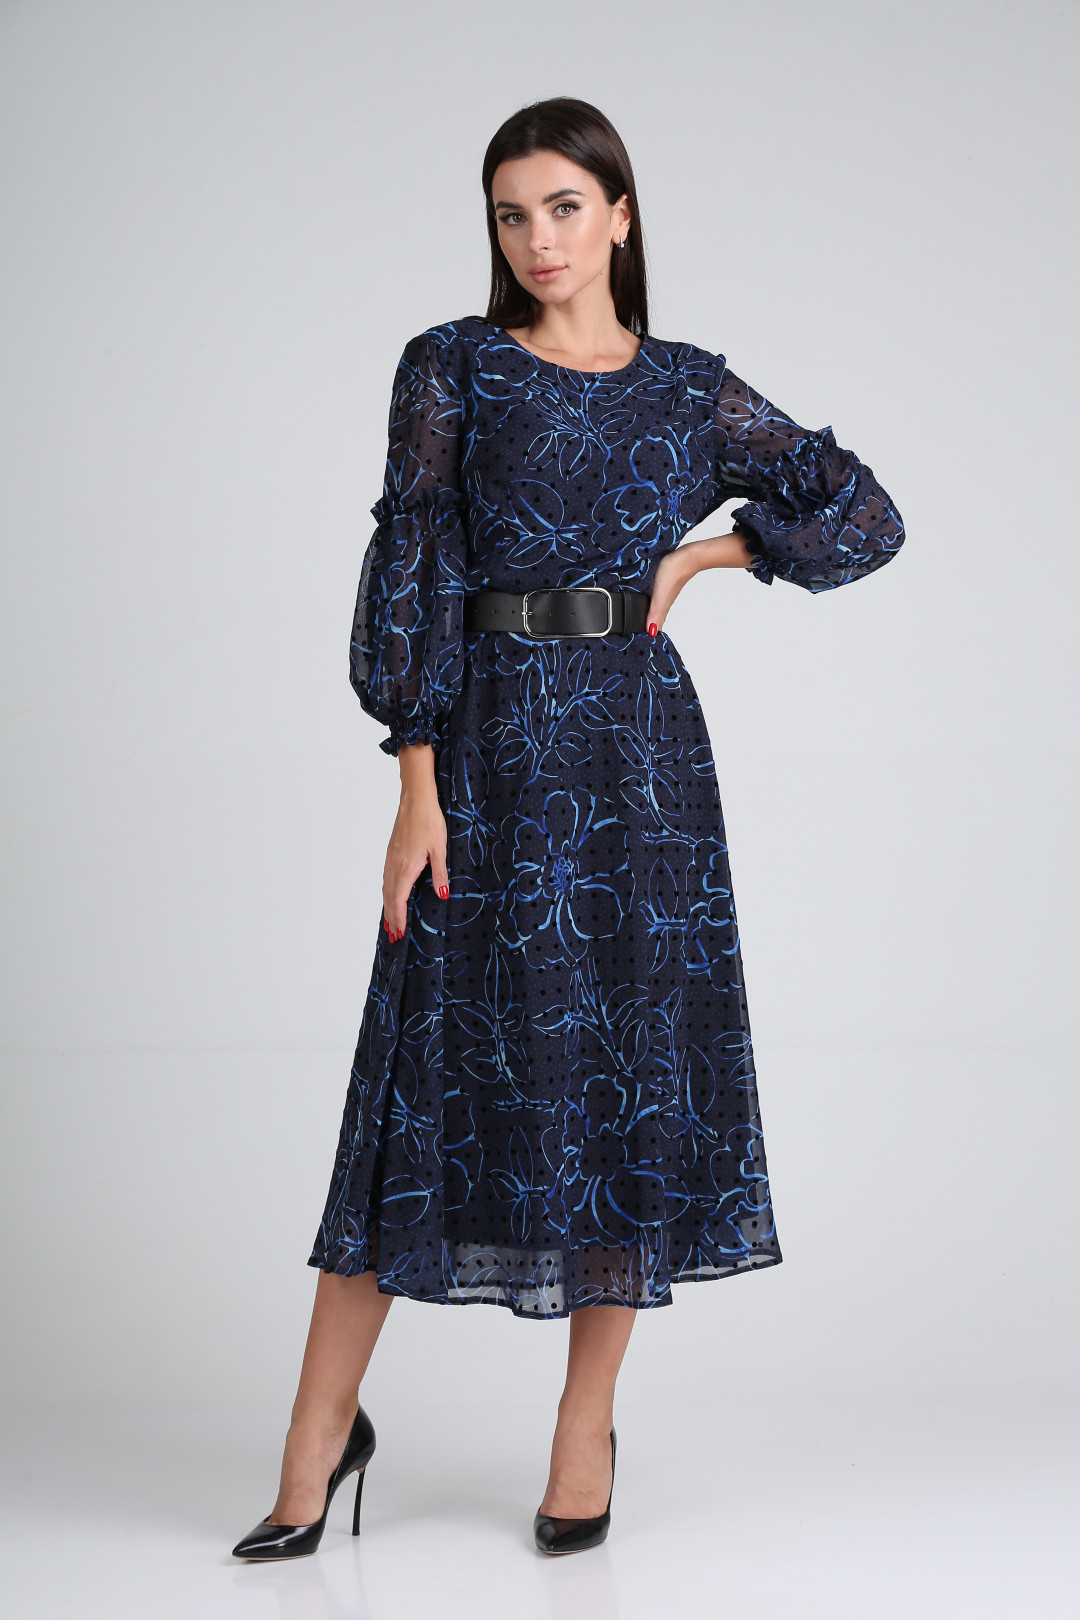 Платье Мода-Версаль 2342 синий